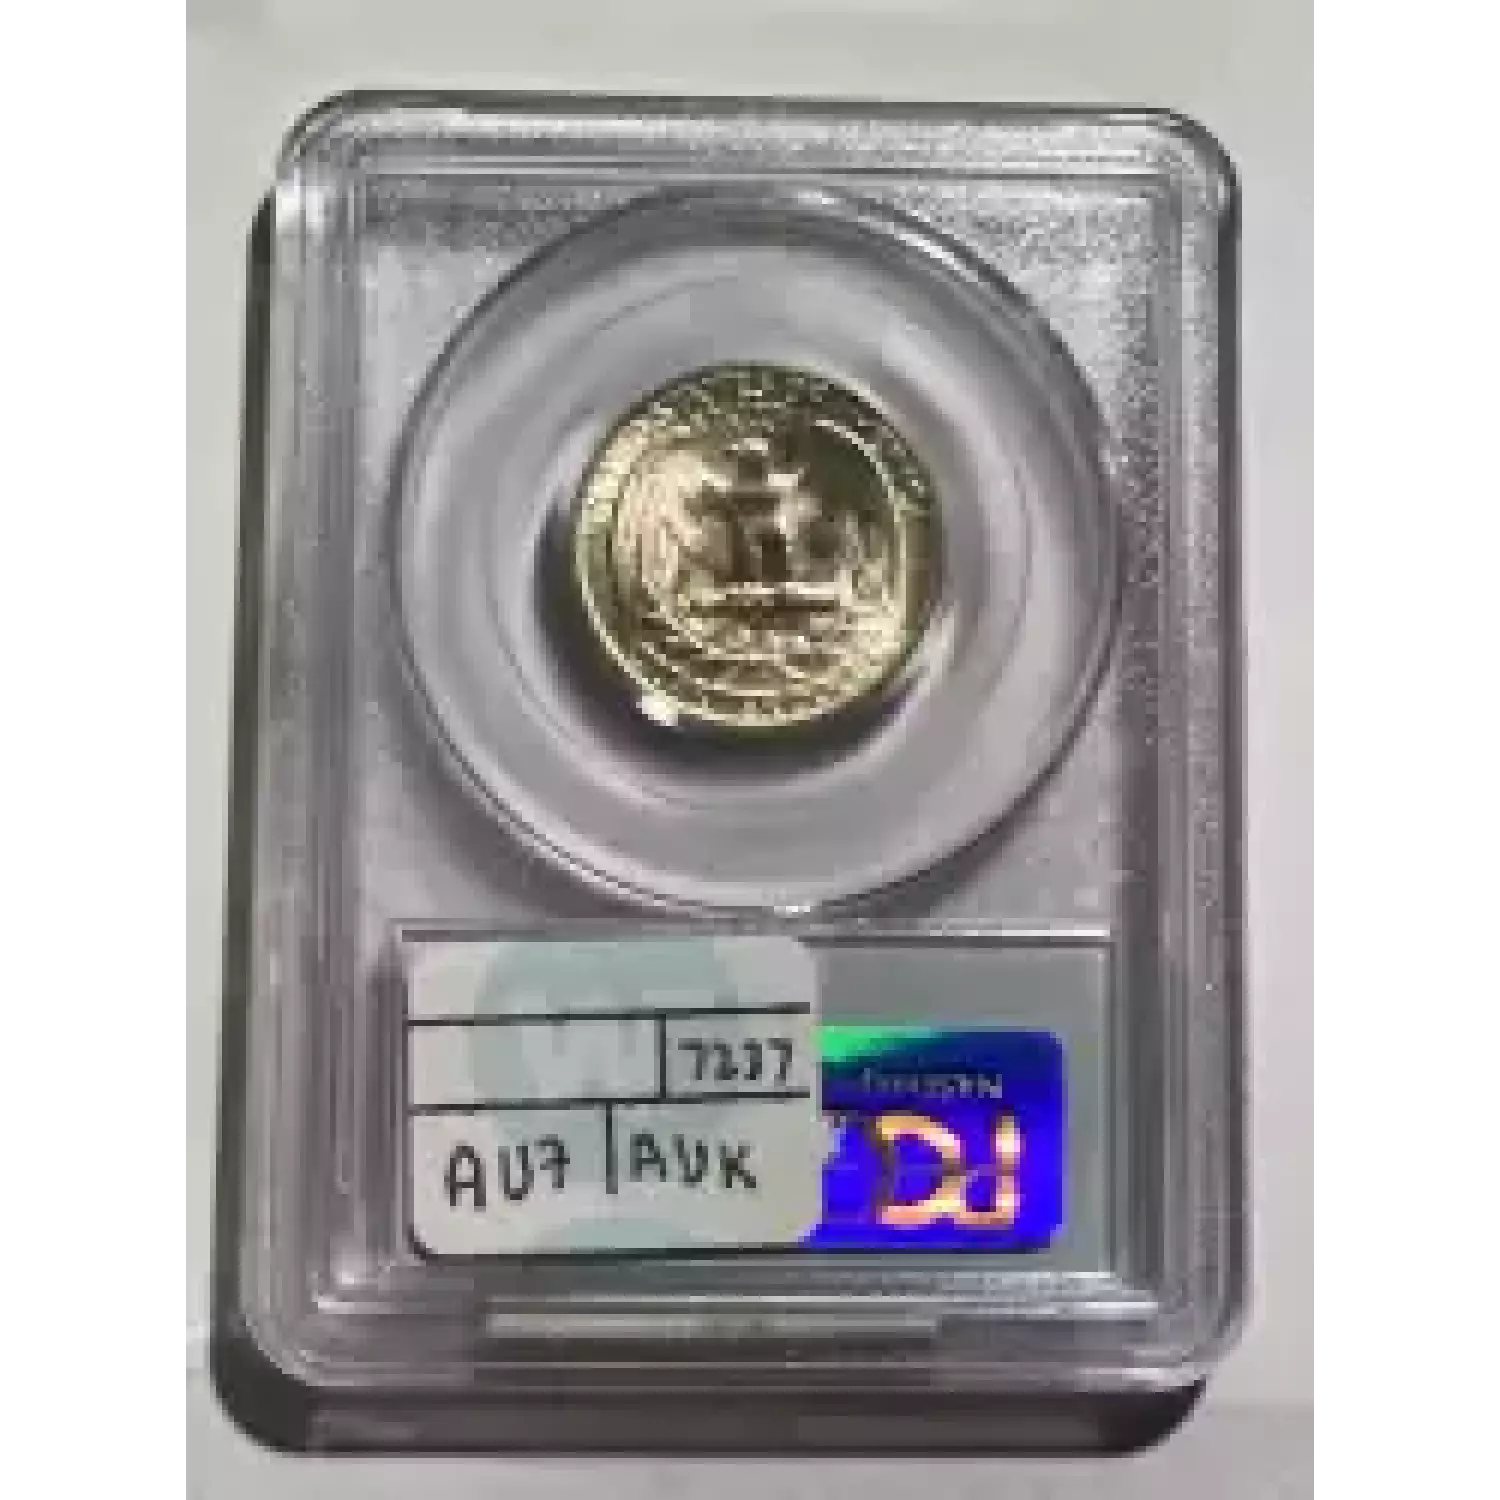 Quarter Dollars - Washington-Silver Coinage (2)